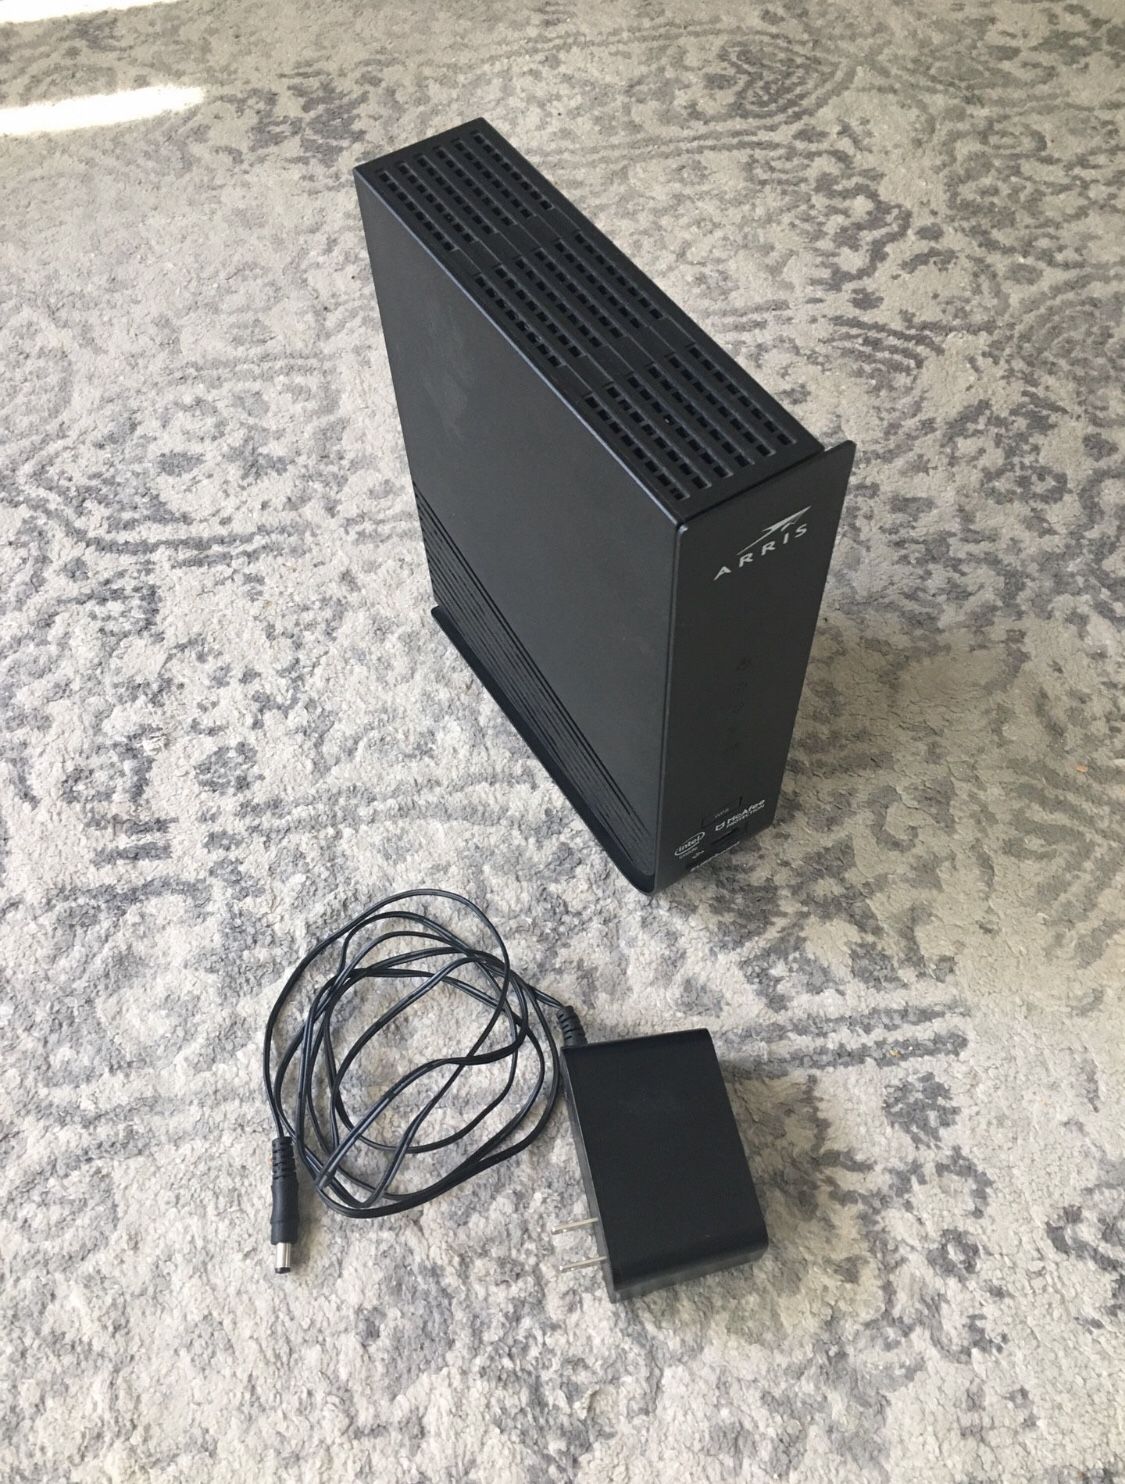 ARRIS Surfboard (24x8) DOCSIS 3.0 Cable Modem Plus AC2350 Dual Band Wi-Fi Router |